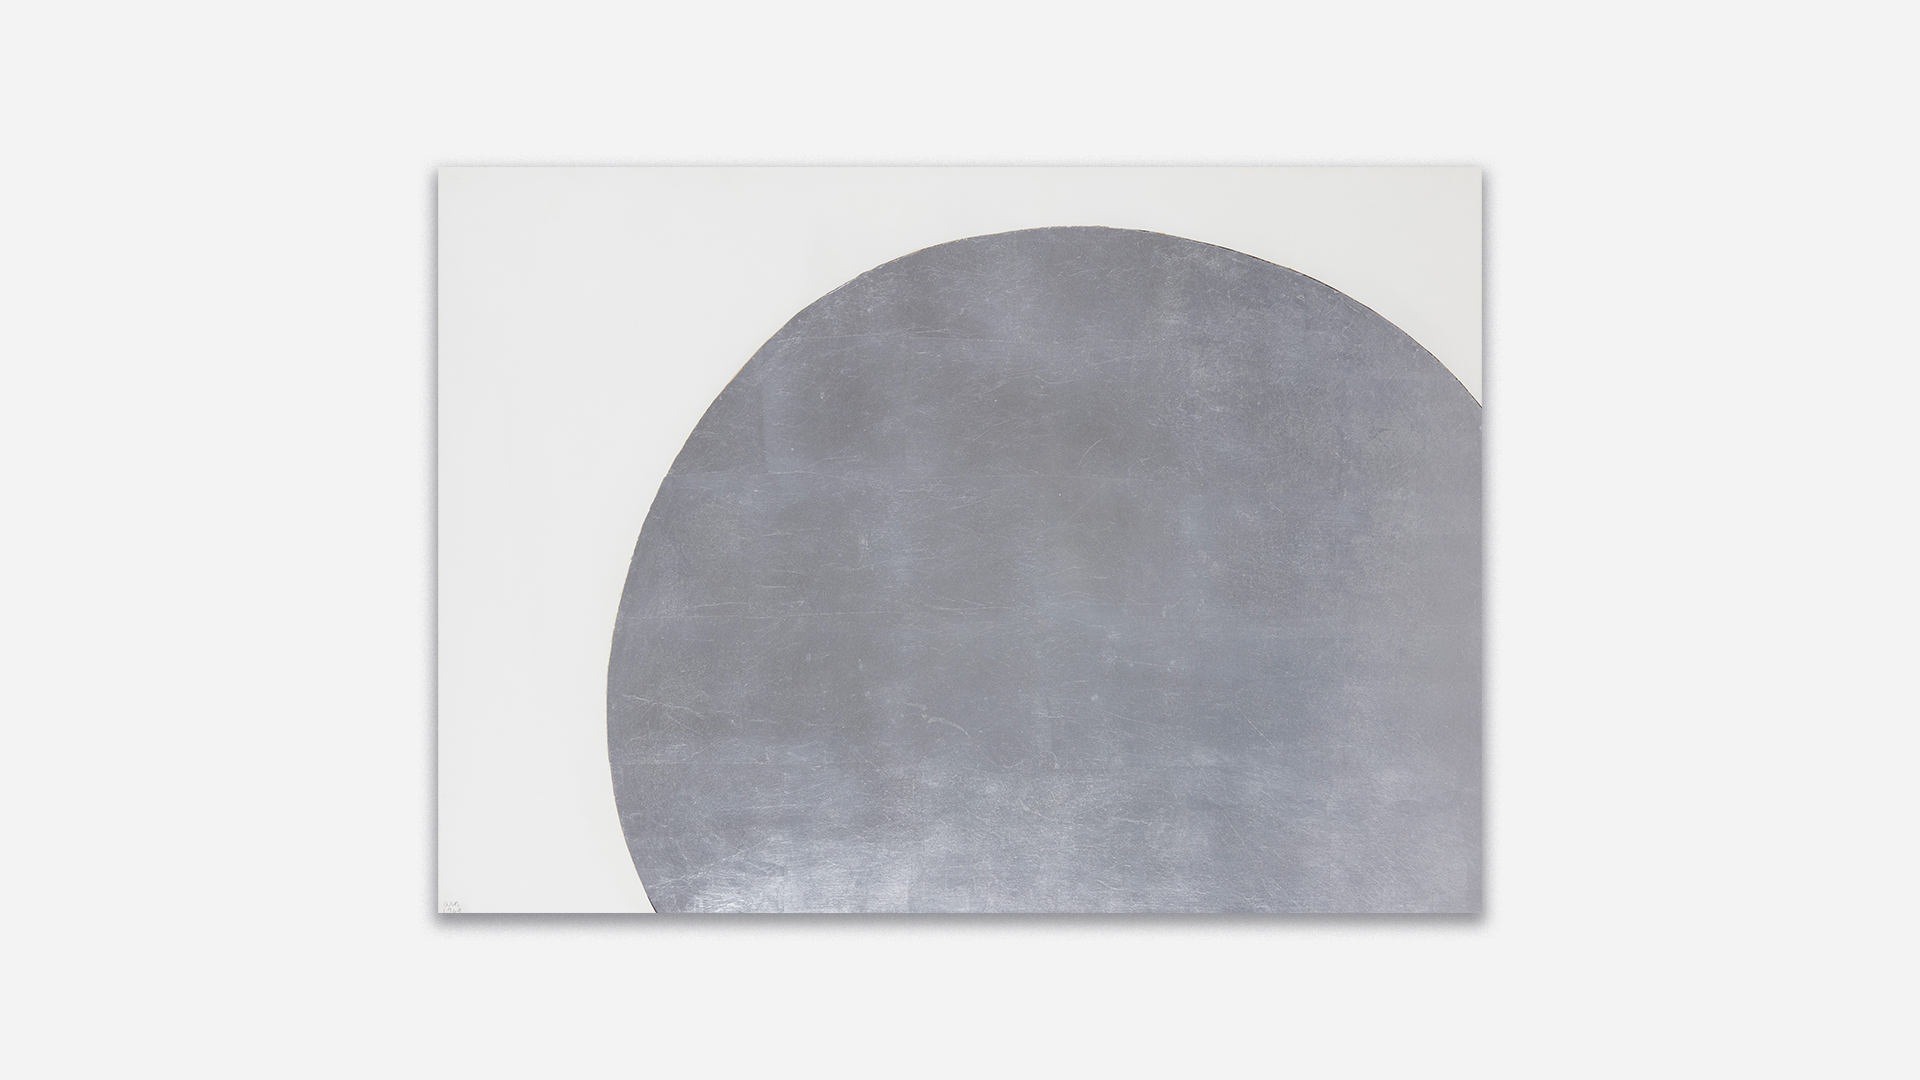 Anna-Eva Bergman, N°48-1969 Une autre lune, 1969, Vinyl and metal leaf on cardboard mounted on canvas, 74 x 103.5 cm